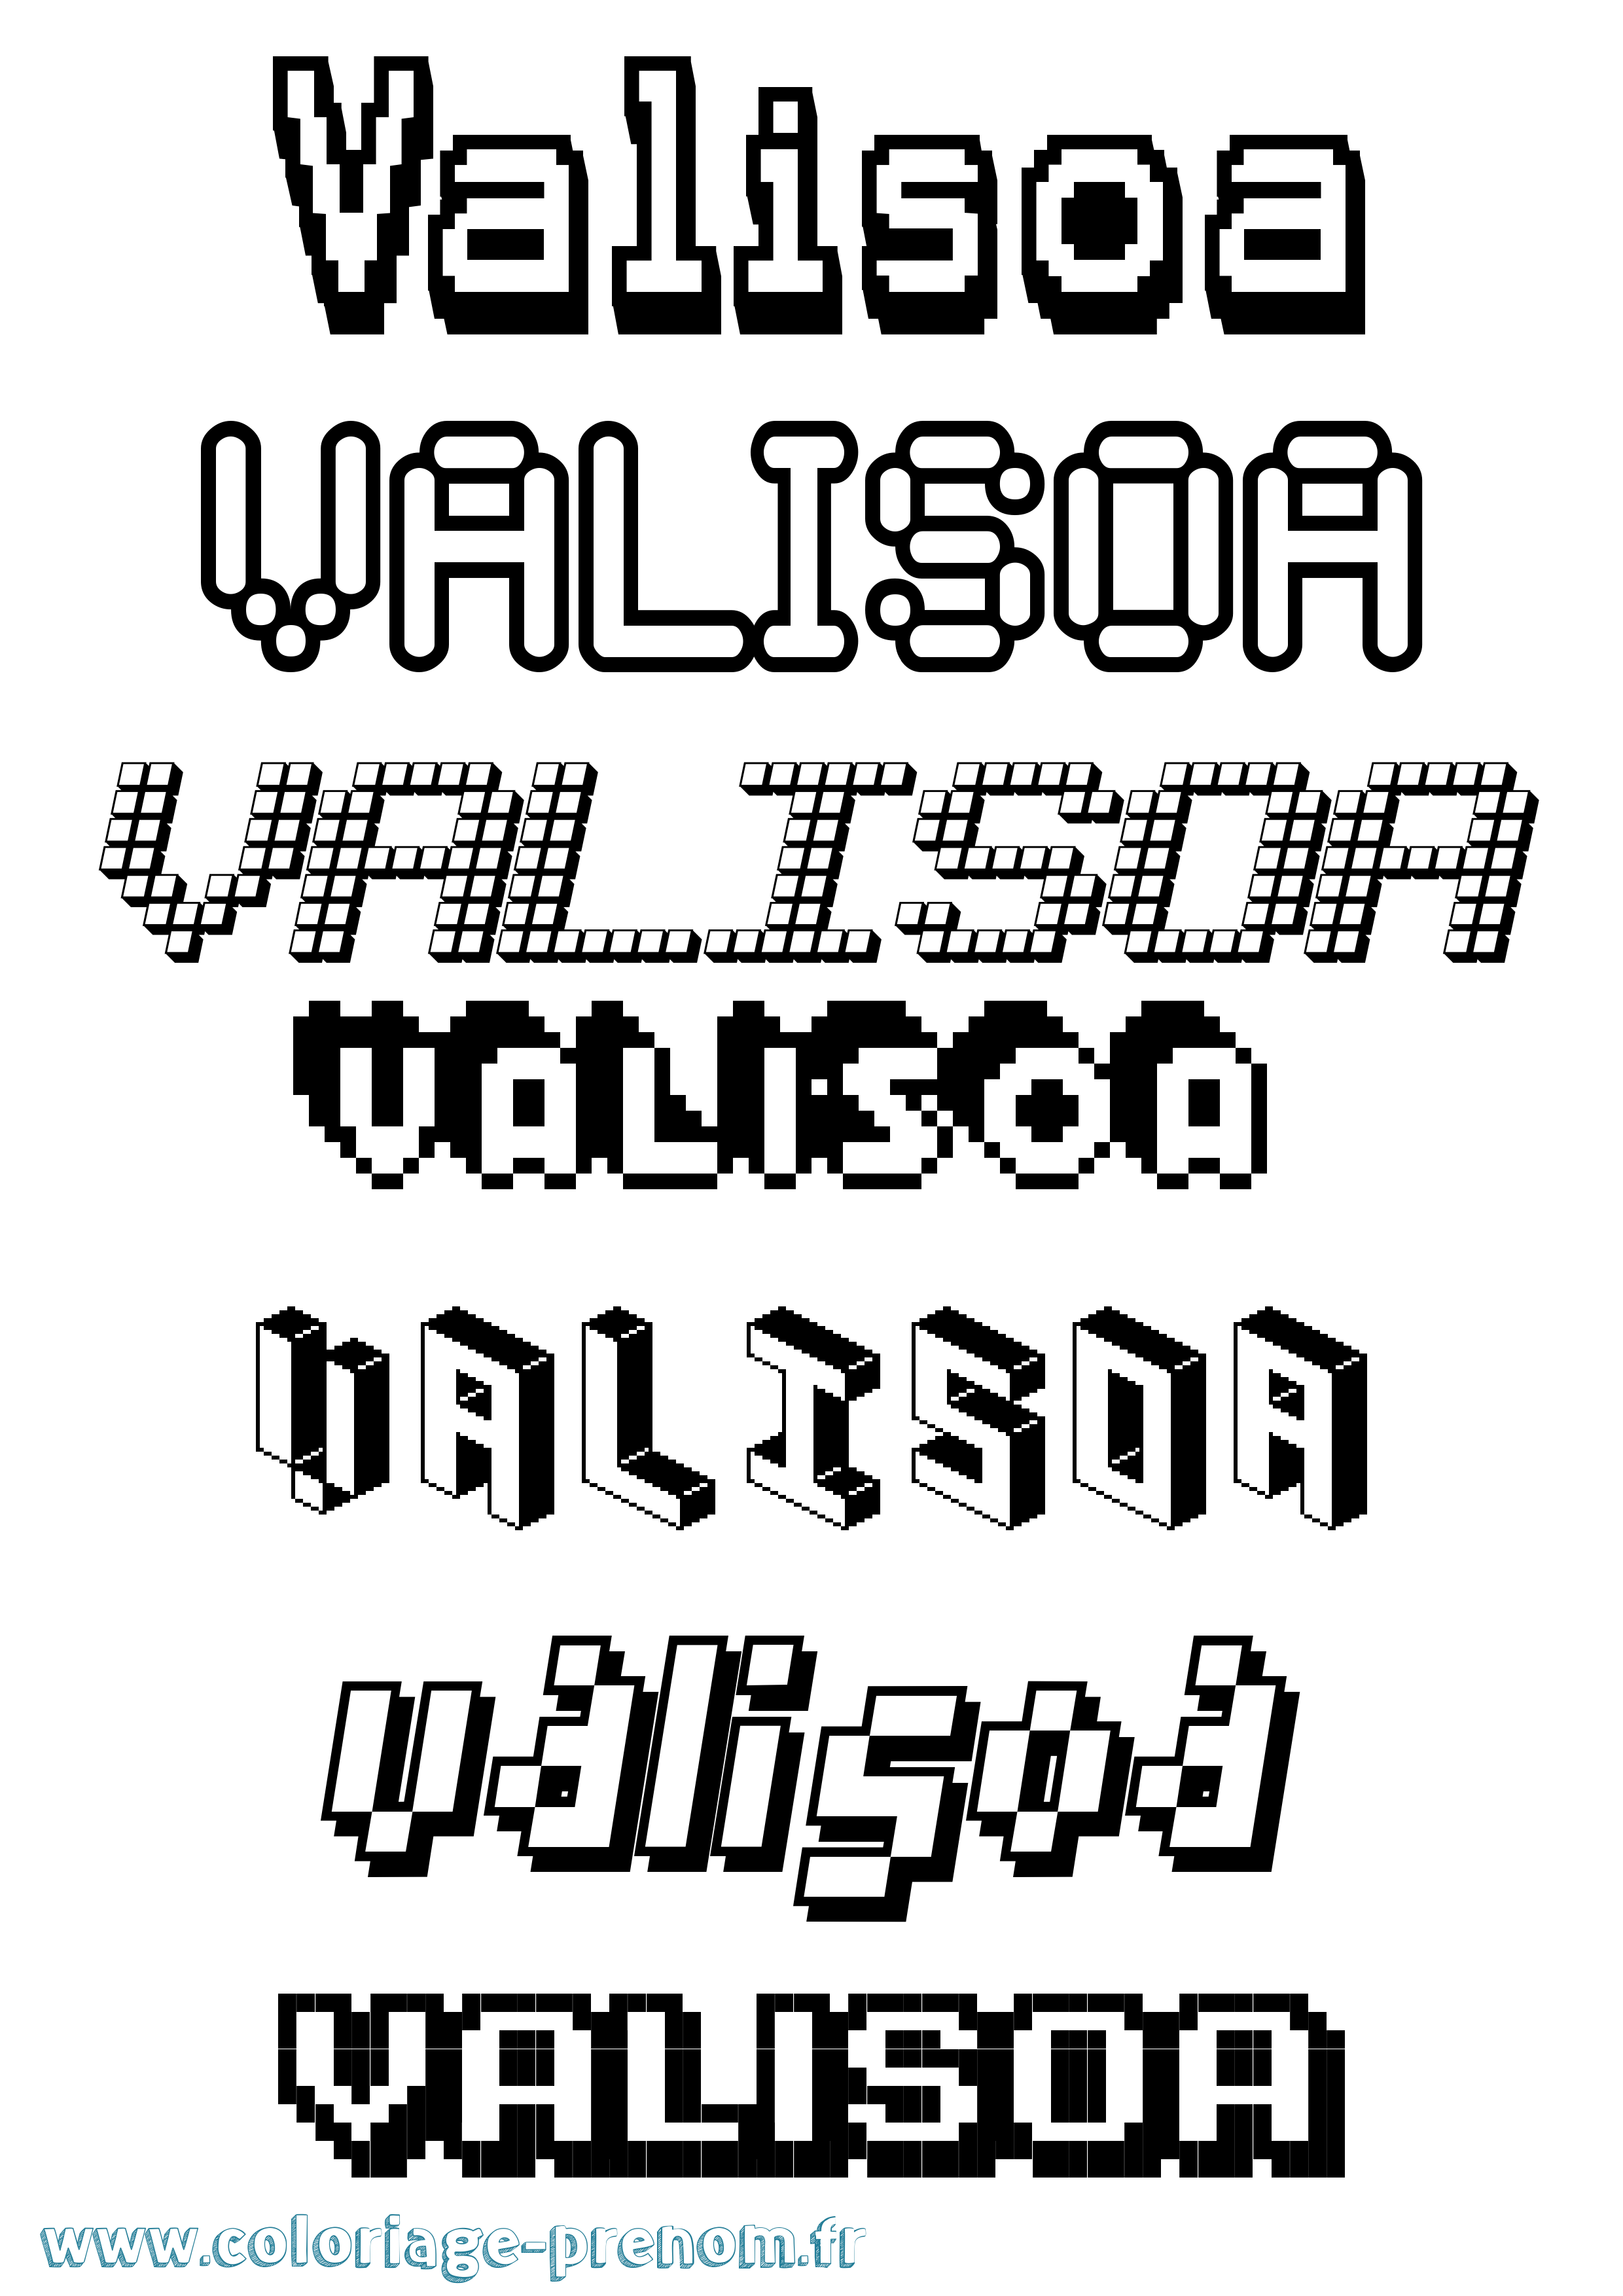 Coloriage prénom Valisoa Pixel